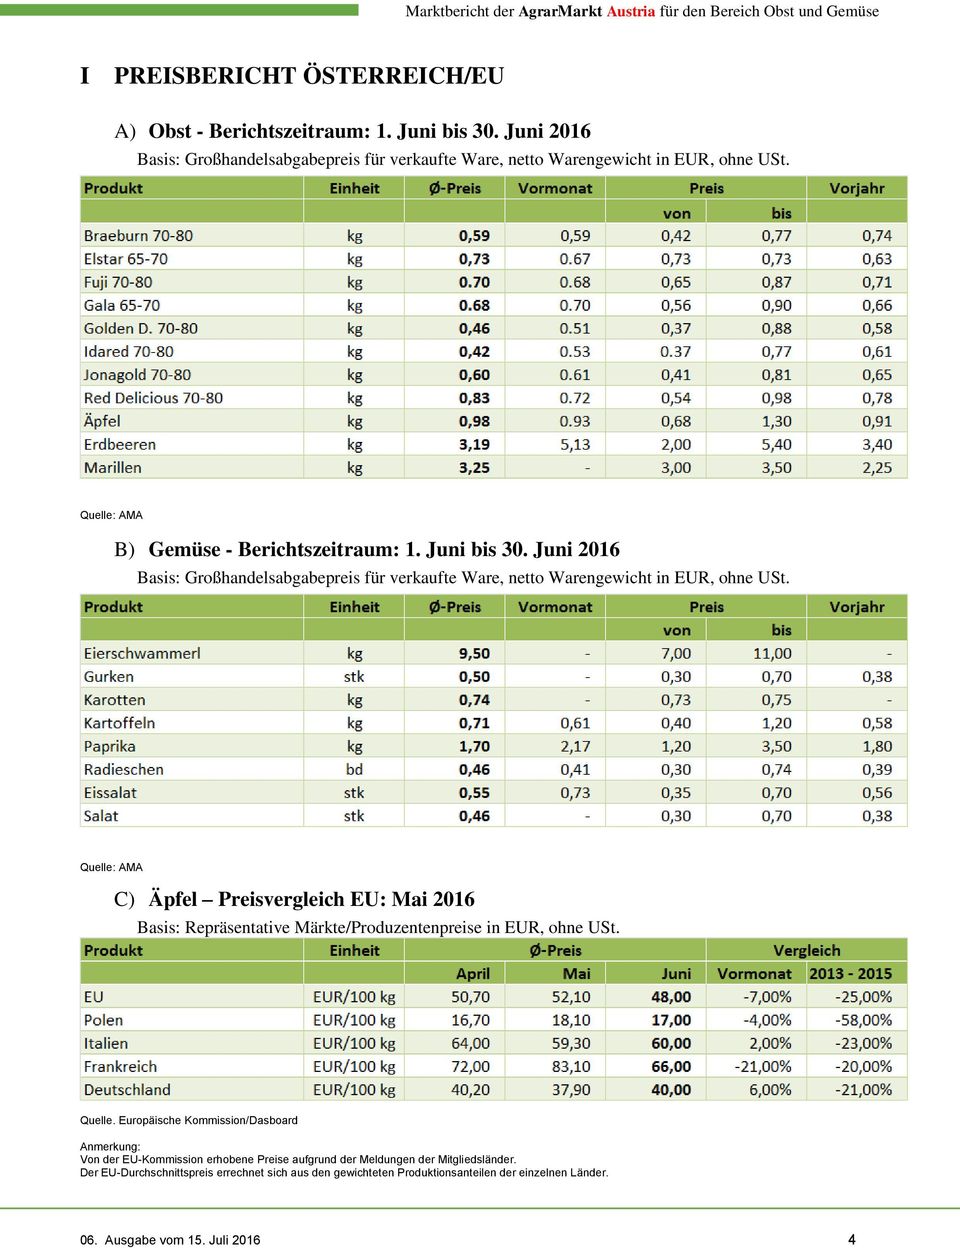 Quelle: AMA C) Äpfel Preisvergleich EU: Mai 2016 Basis: Repräsentative Märkte/Produzentenpreise in EUR, ohne USt. Quelle.